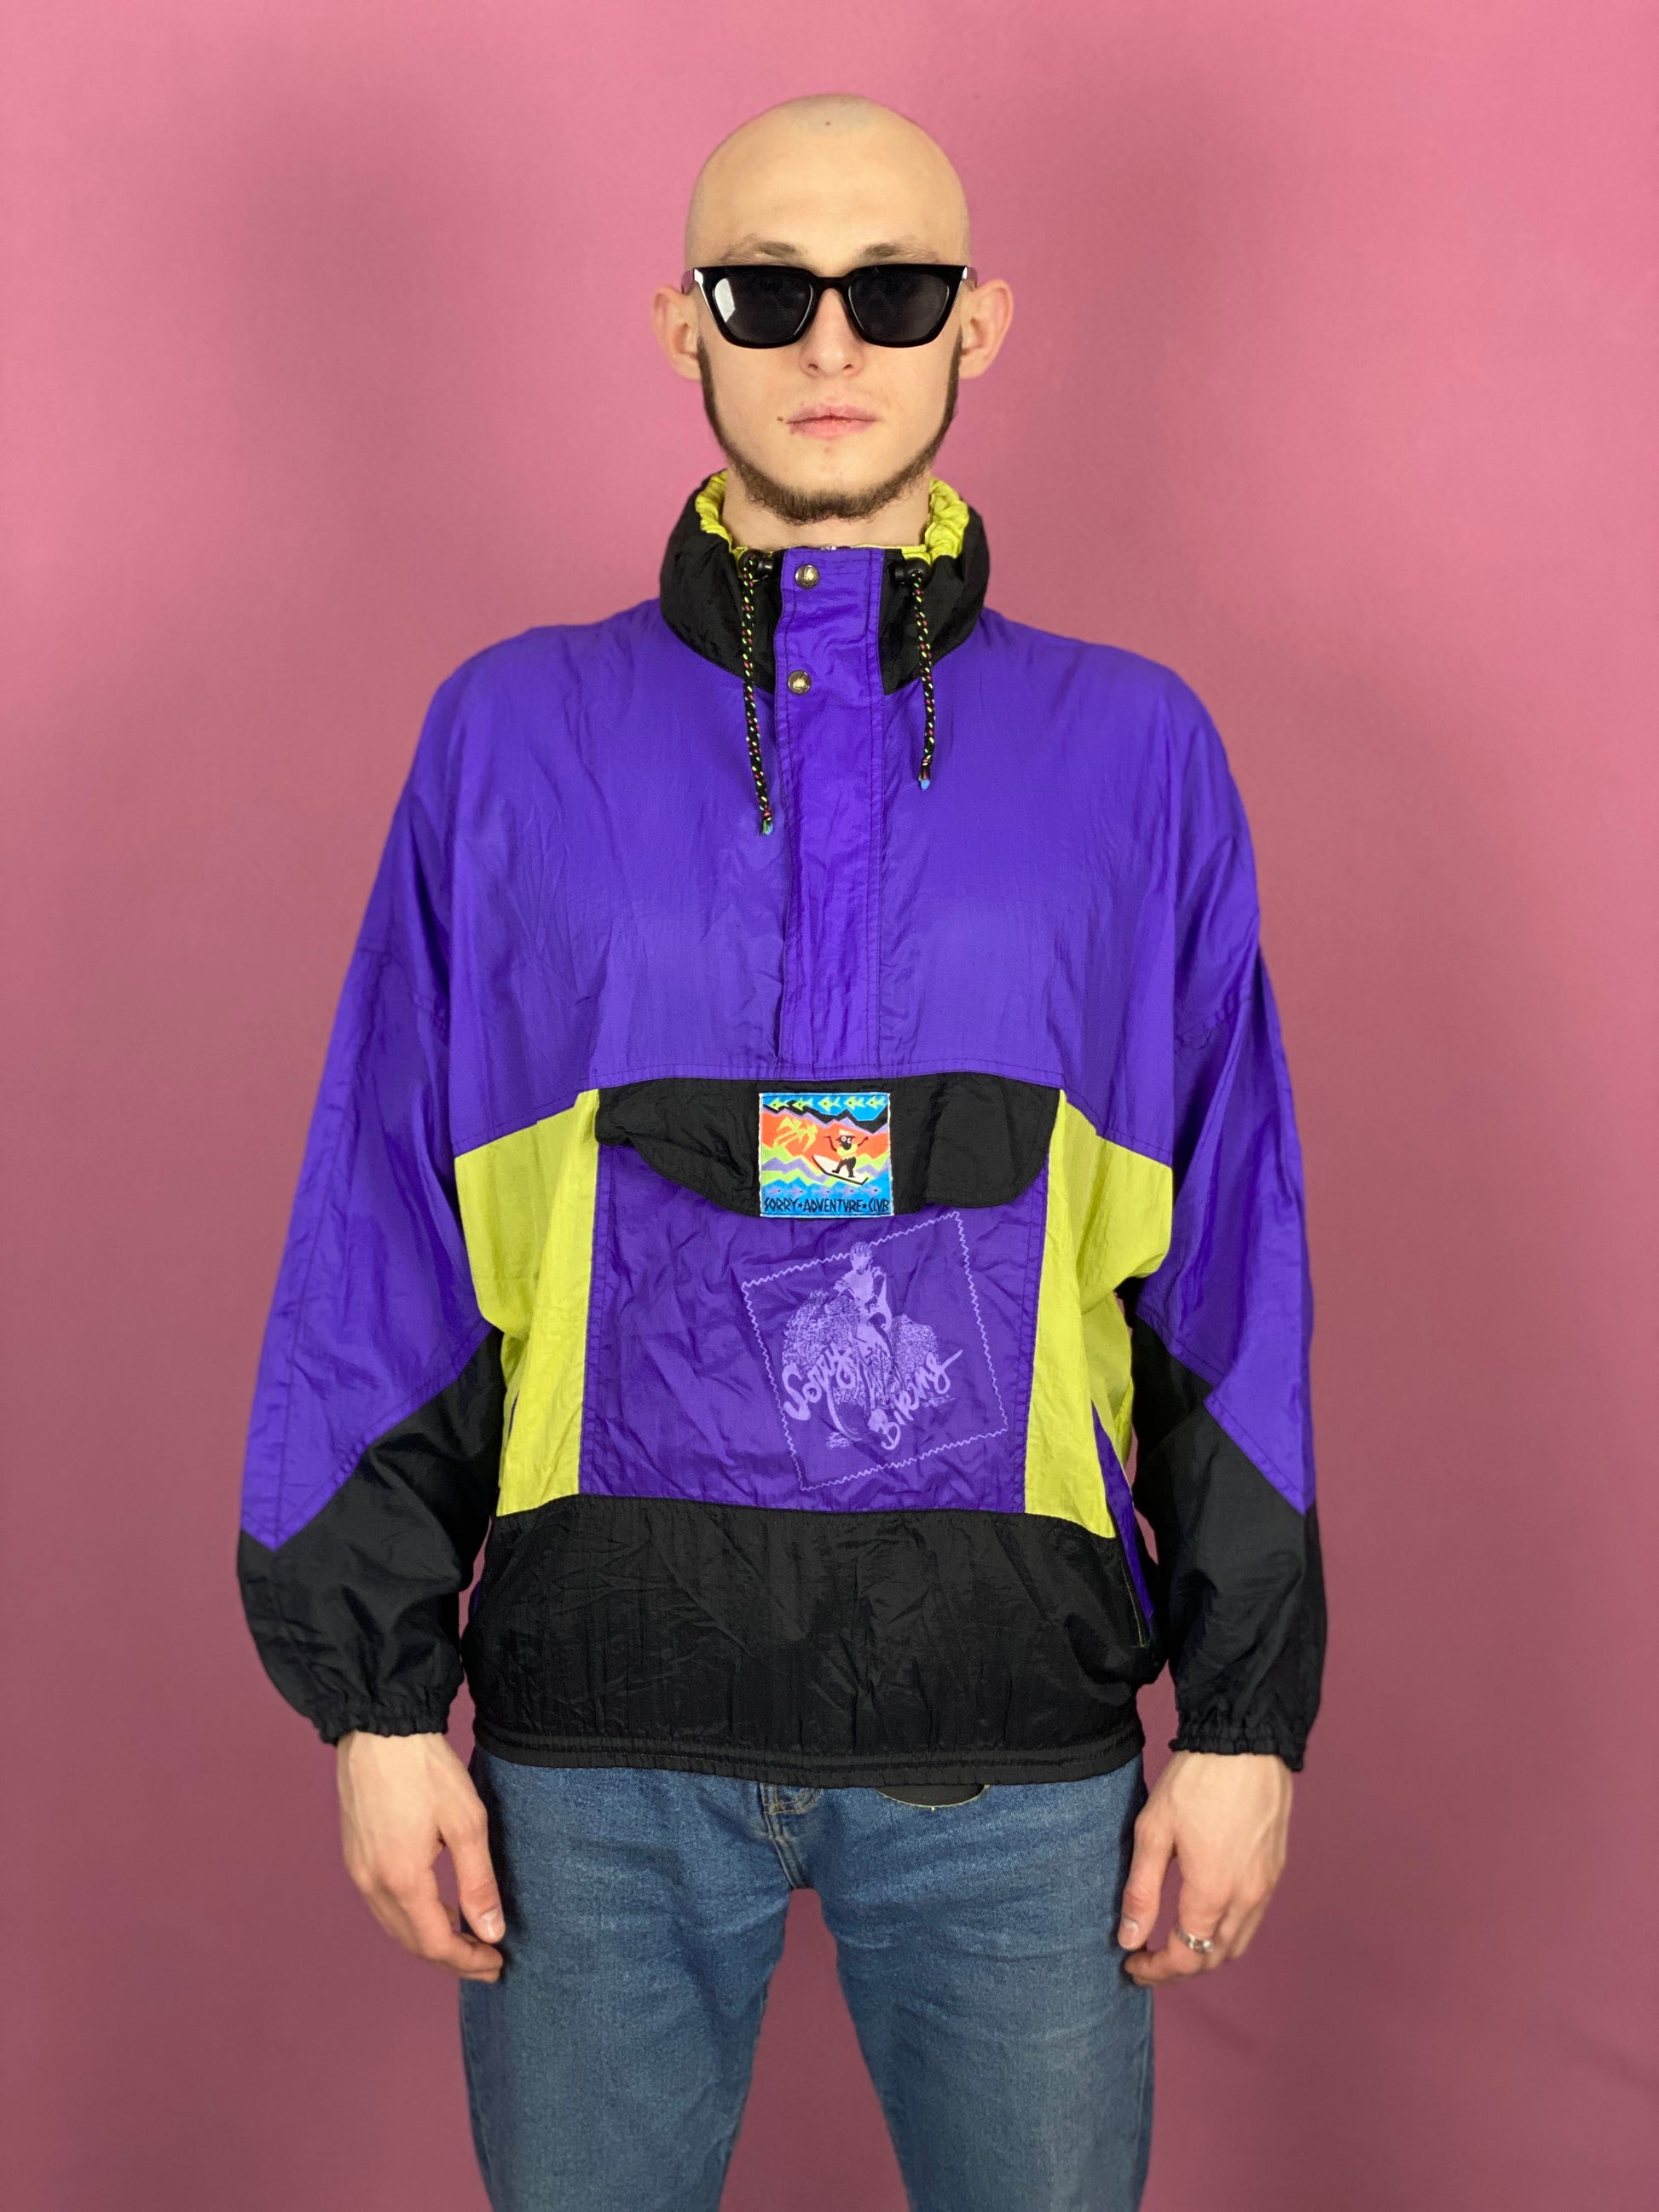 90s Vintage Men's Rain Jacket - Large Purple Nylon